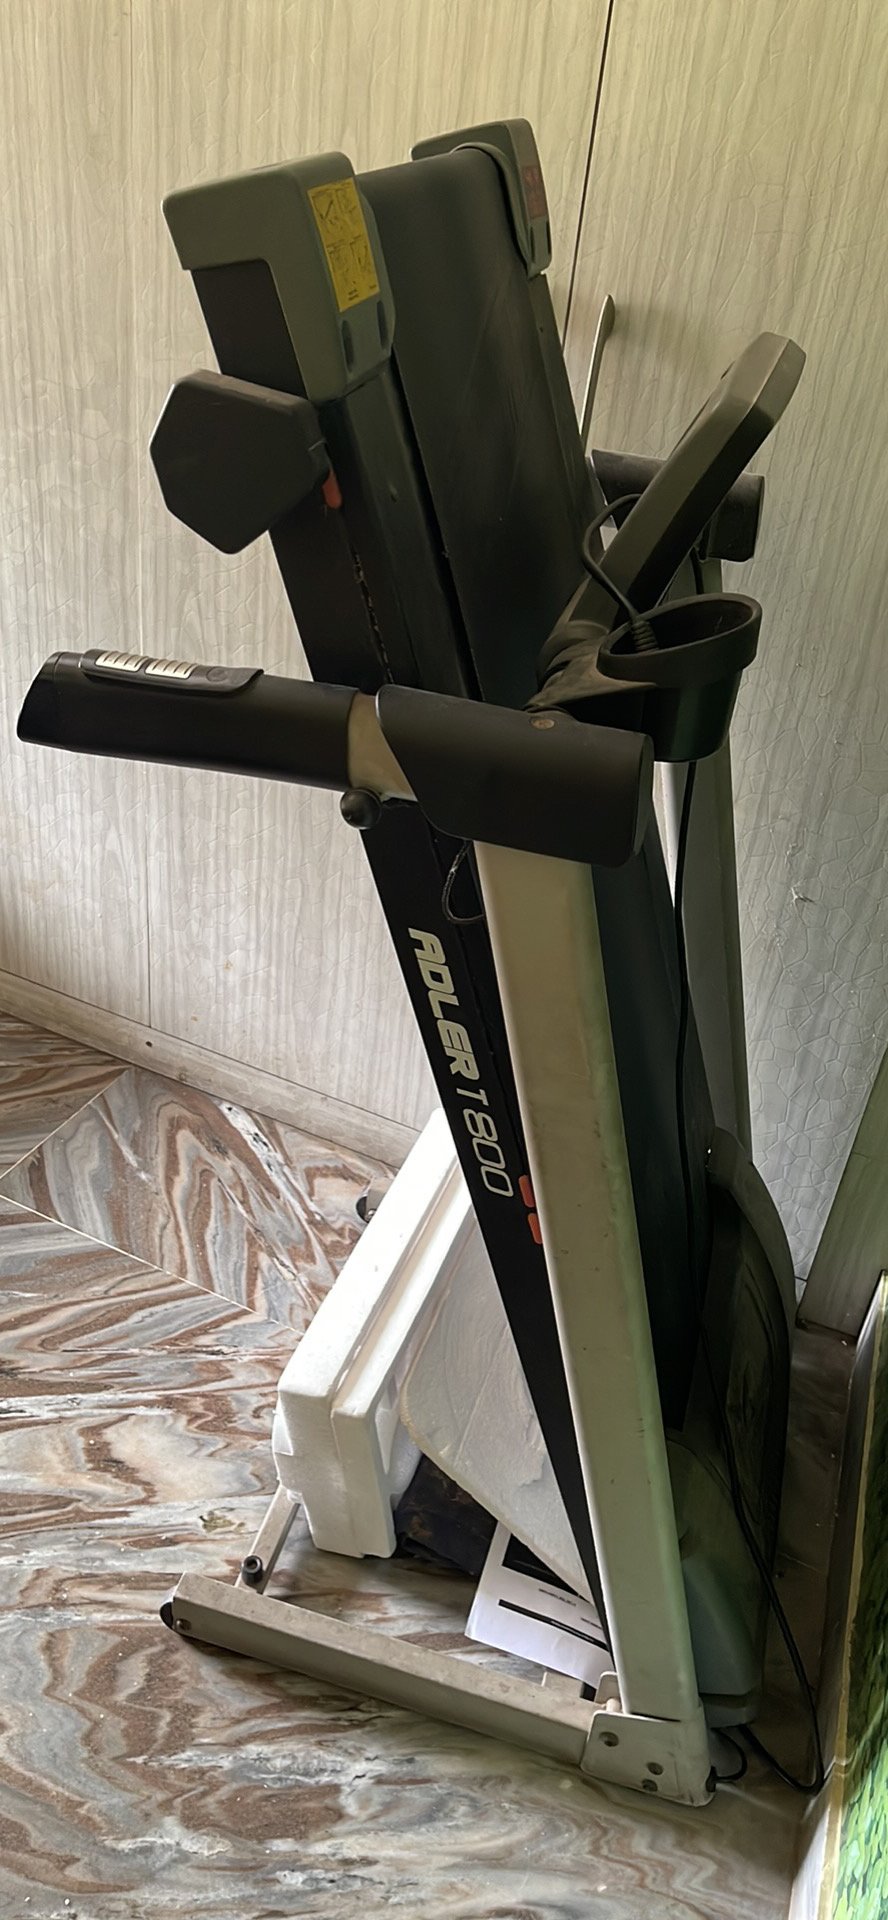 Used Motorized BSA Treadmill available